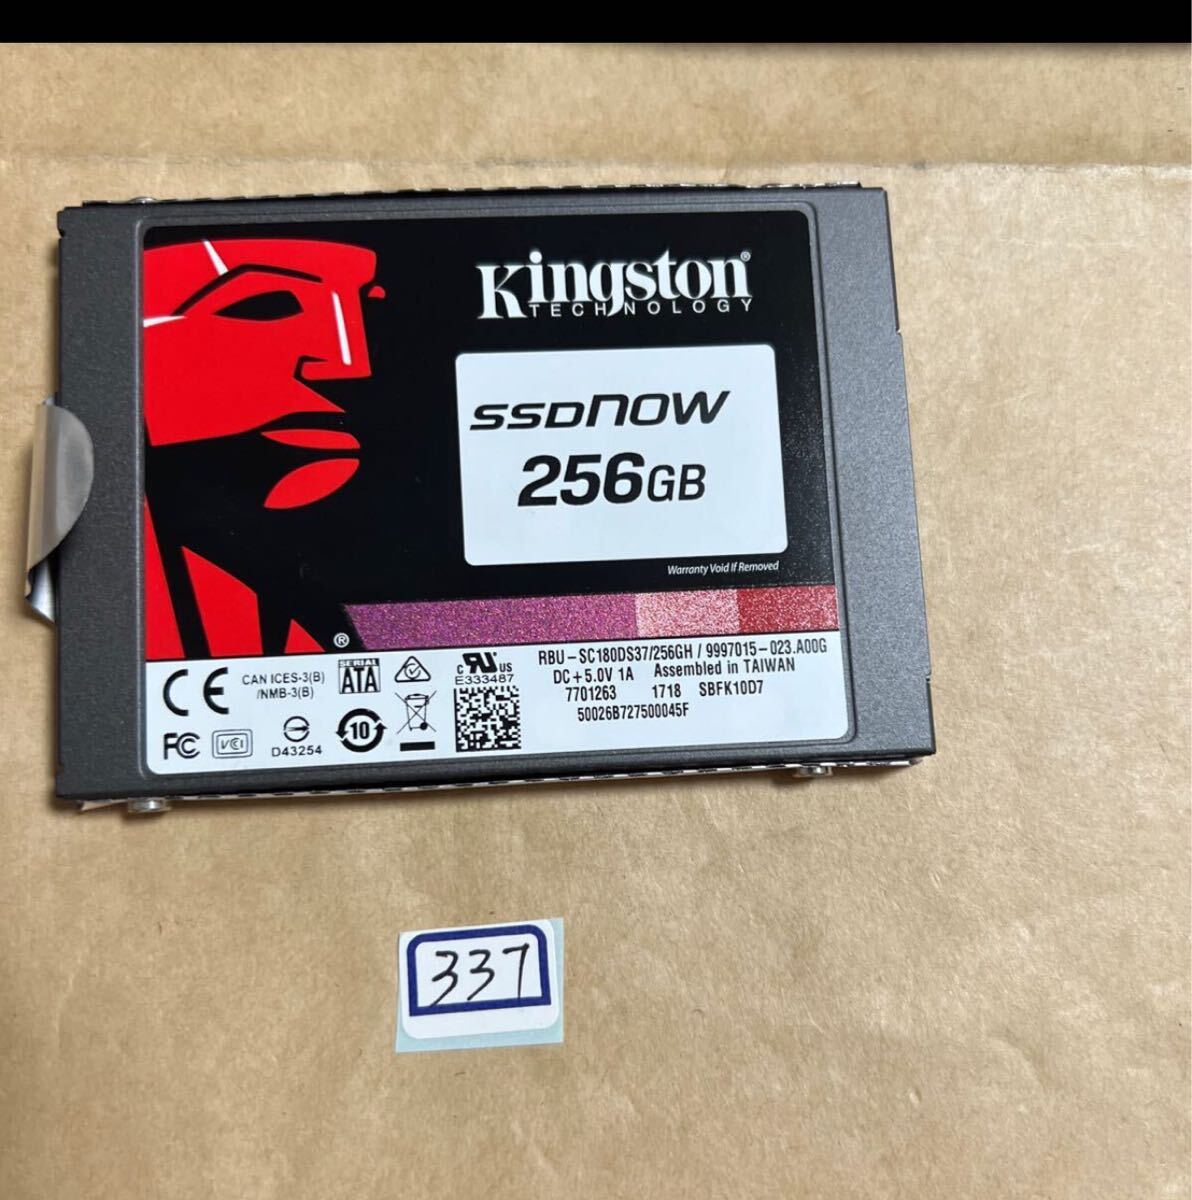 SSD 256GB#337#Kingston RBUSC18DS37256GH 256.0GBの画像1